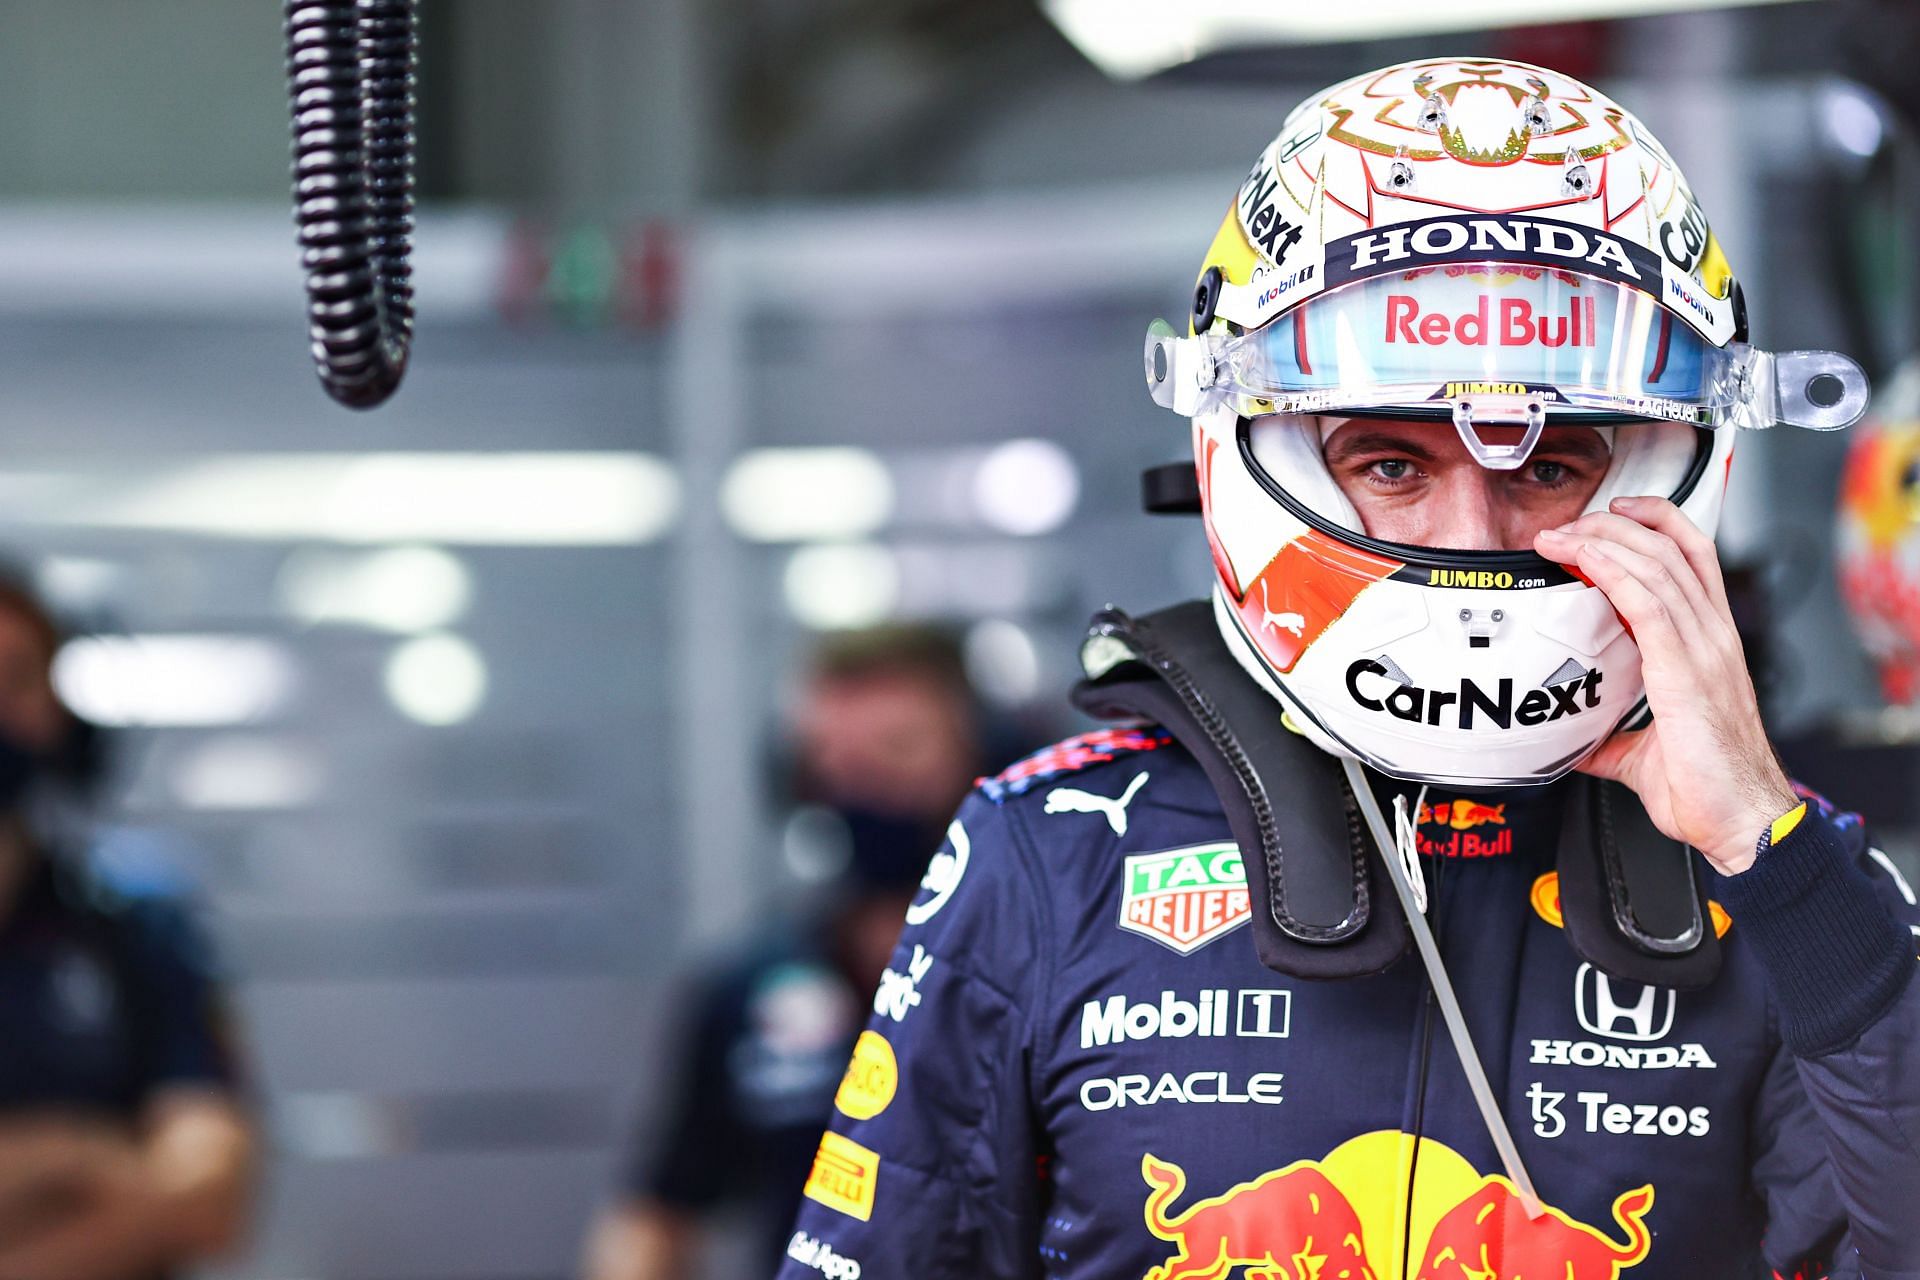 F1 Grand Prix of Qatar - Max Verstappen focuses on the task ahead.